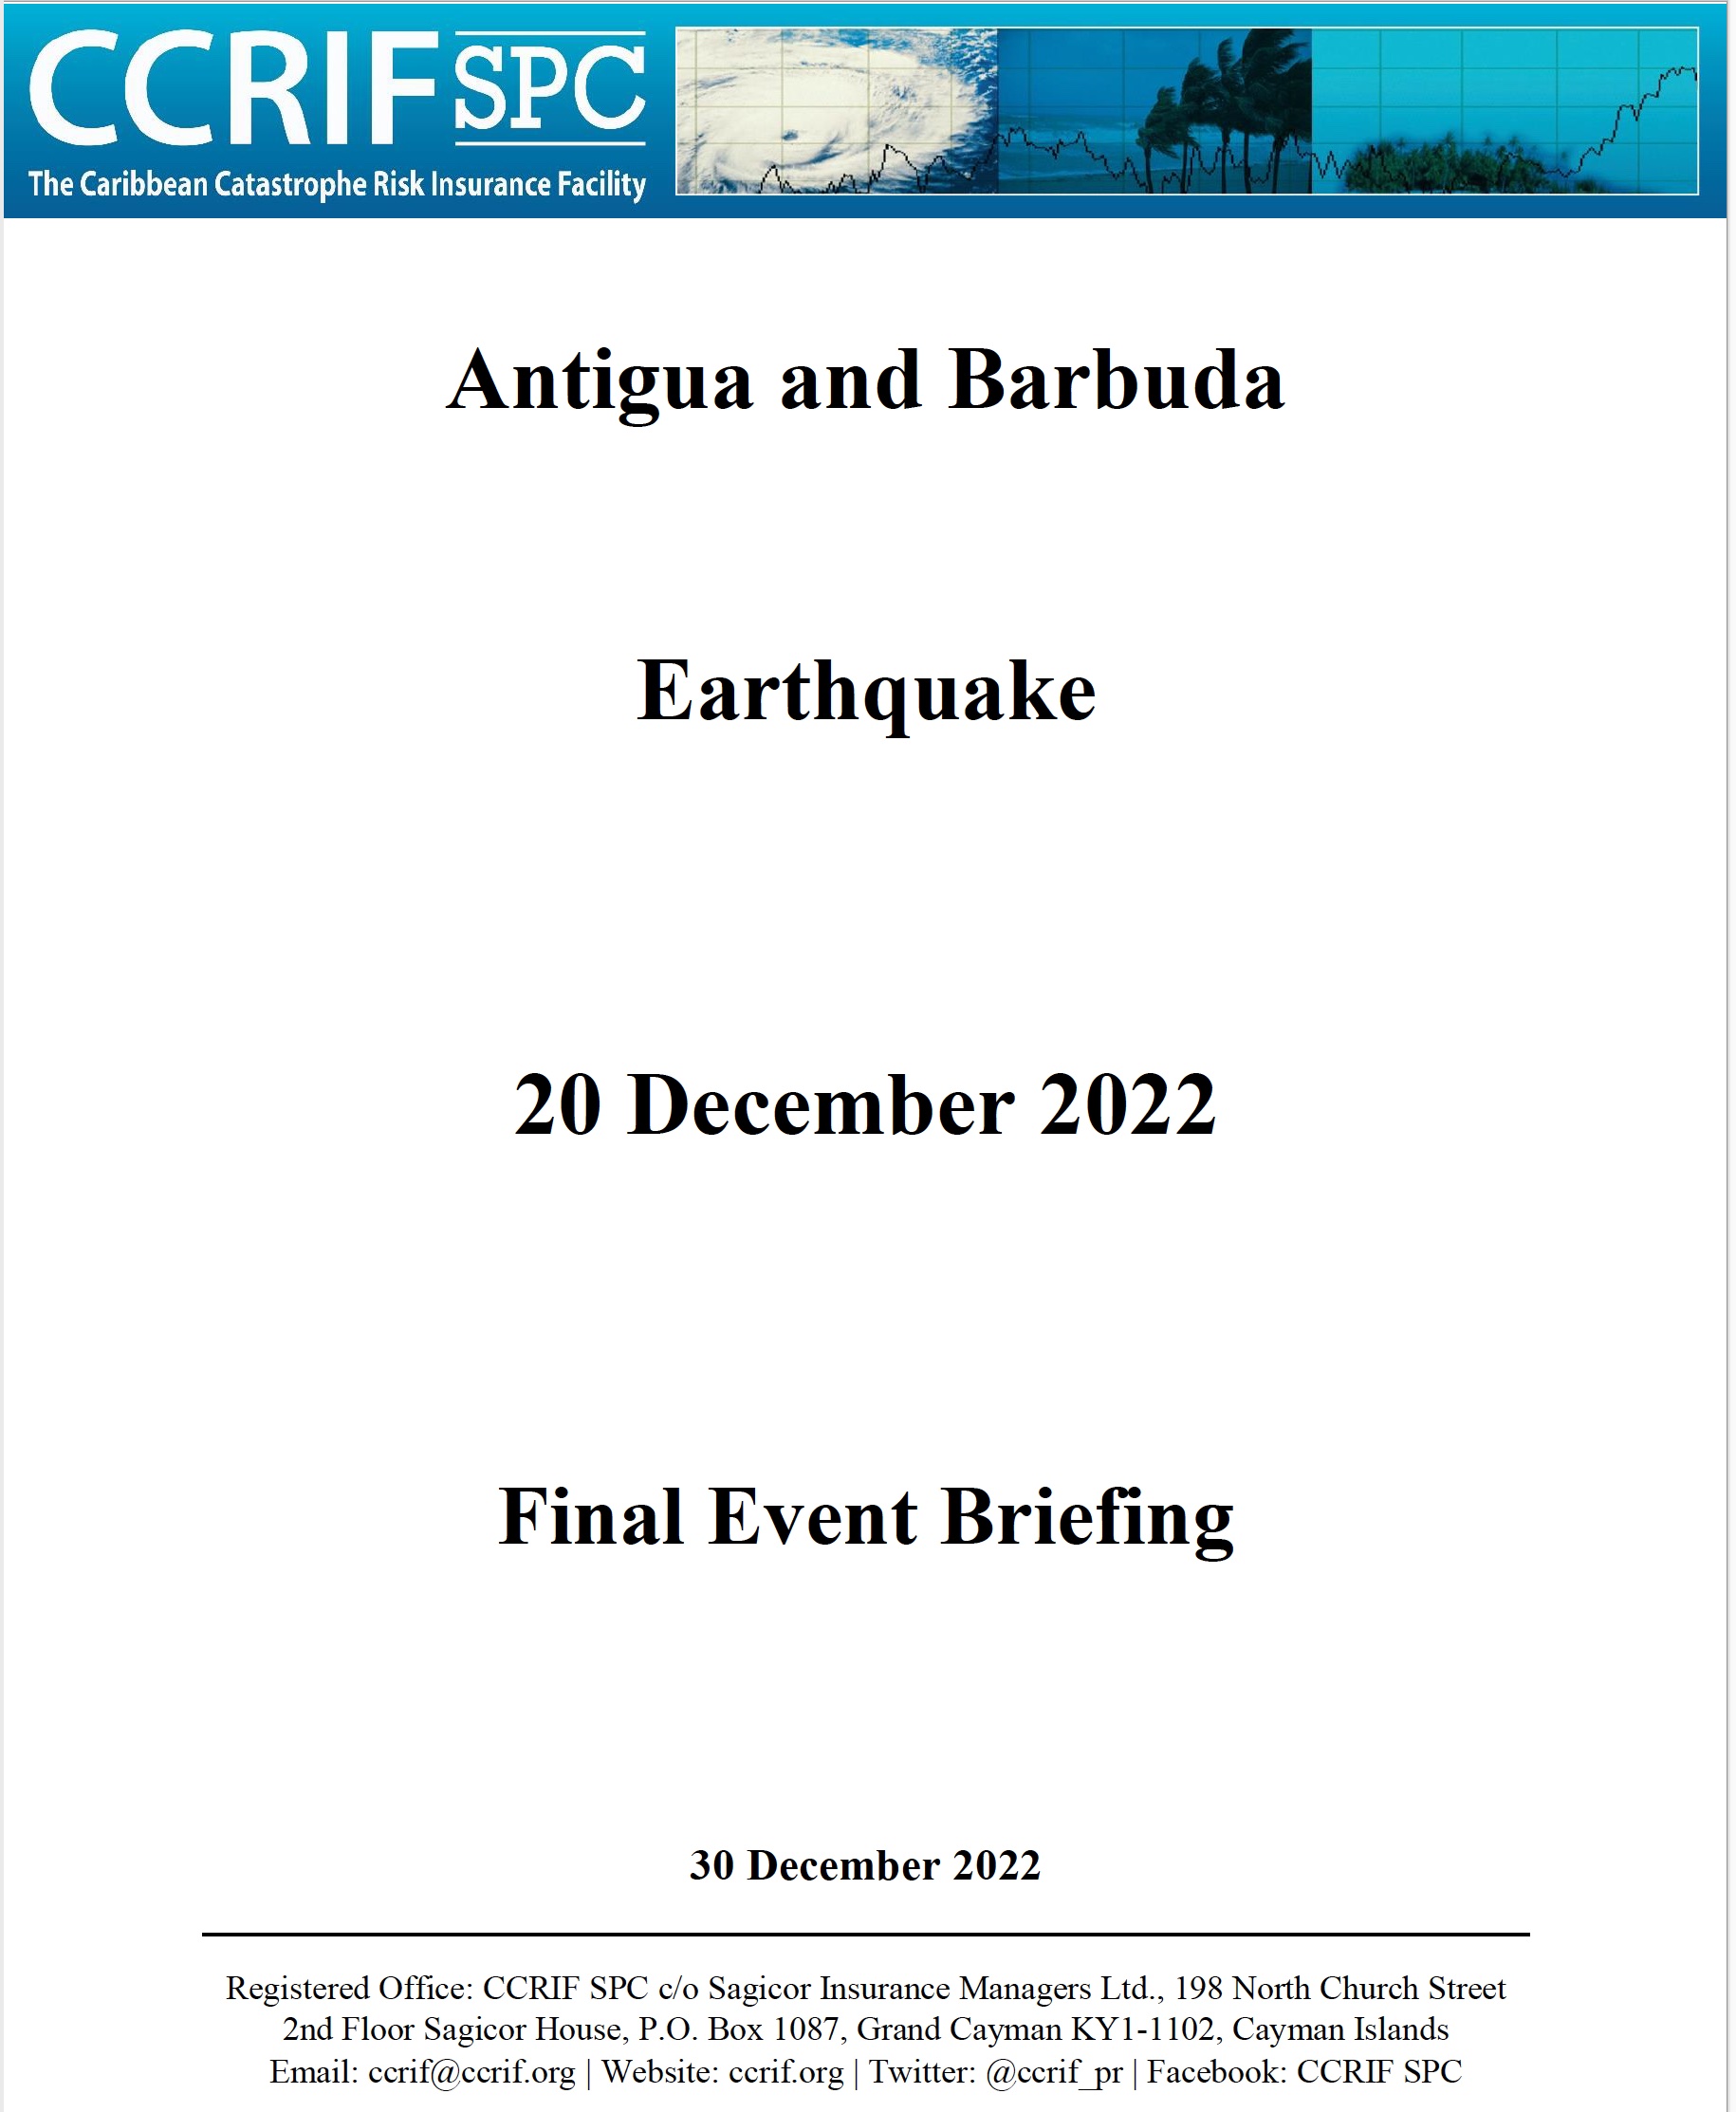 Final Event Briefing - Earthquake - Antigua and Barbuda - December 30 2022